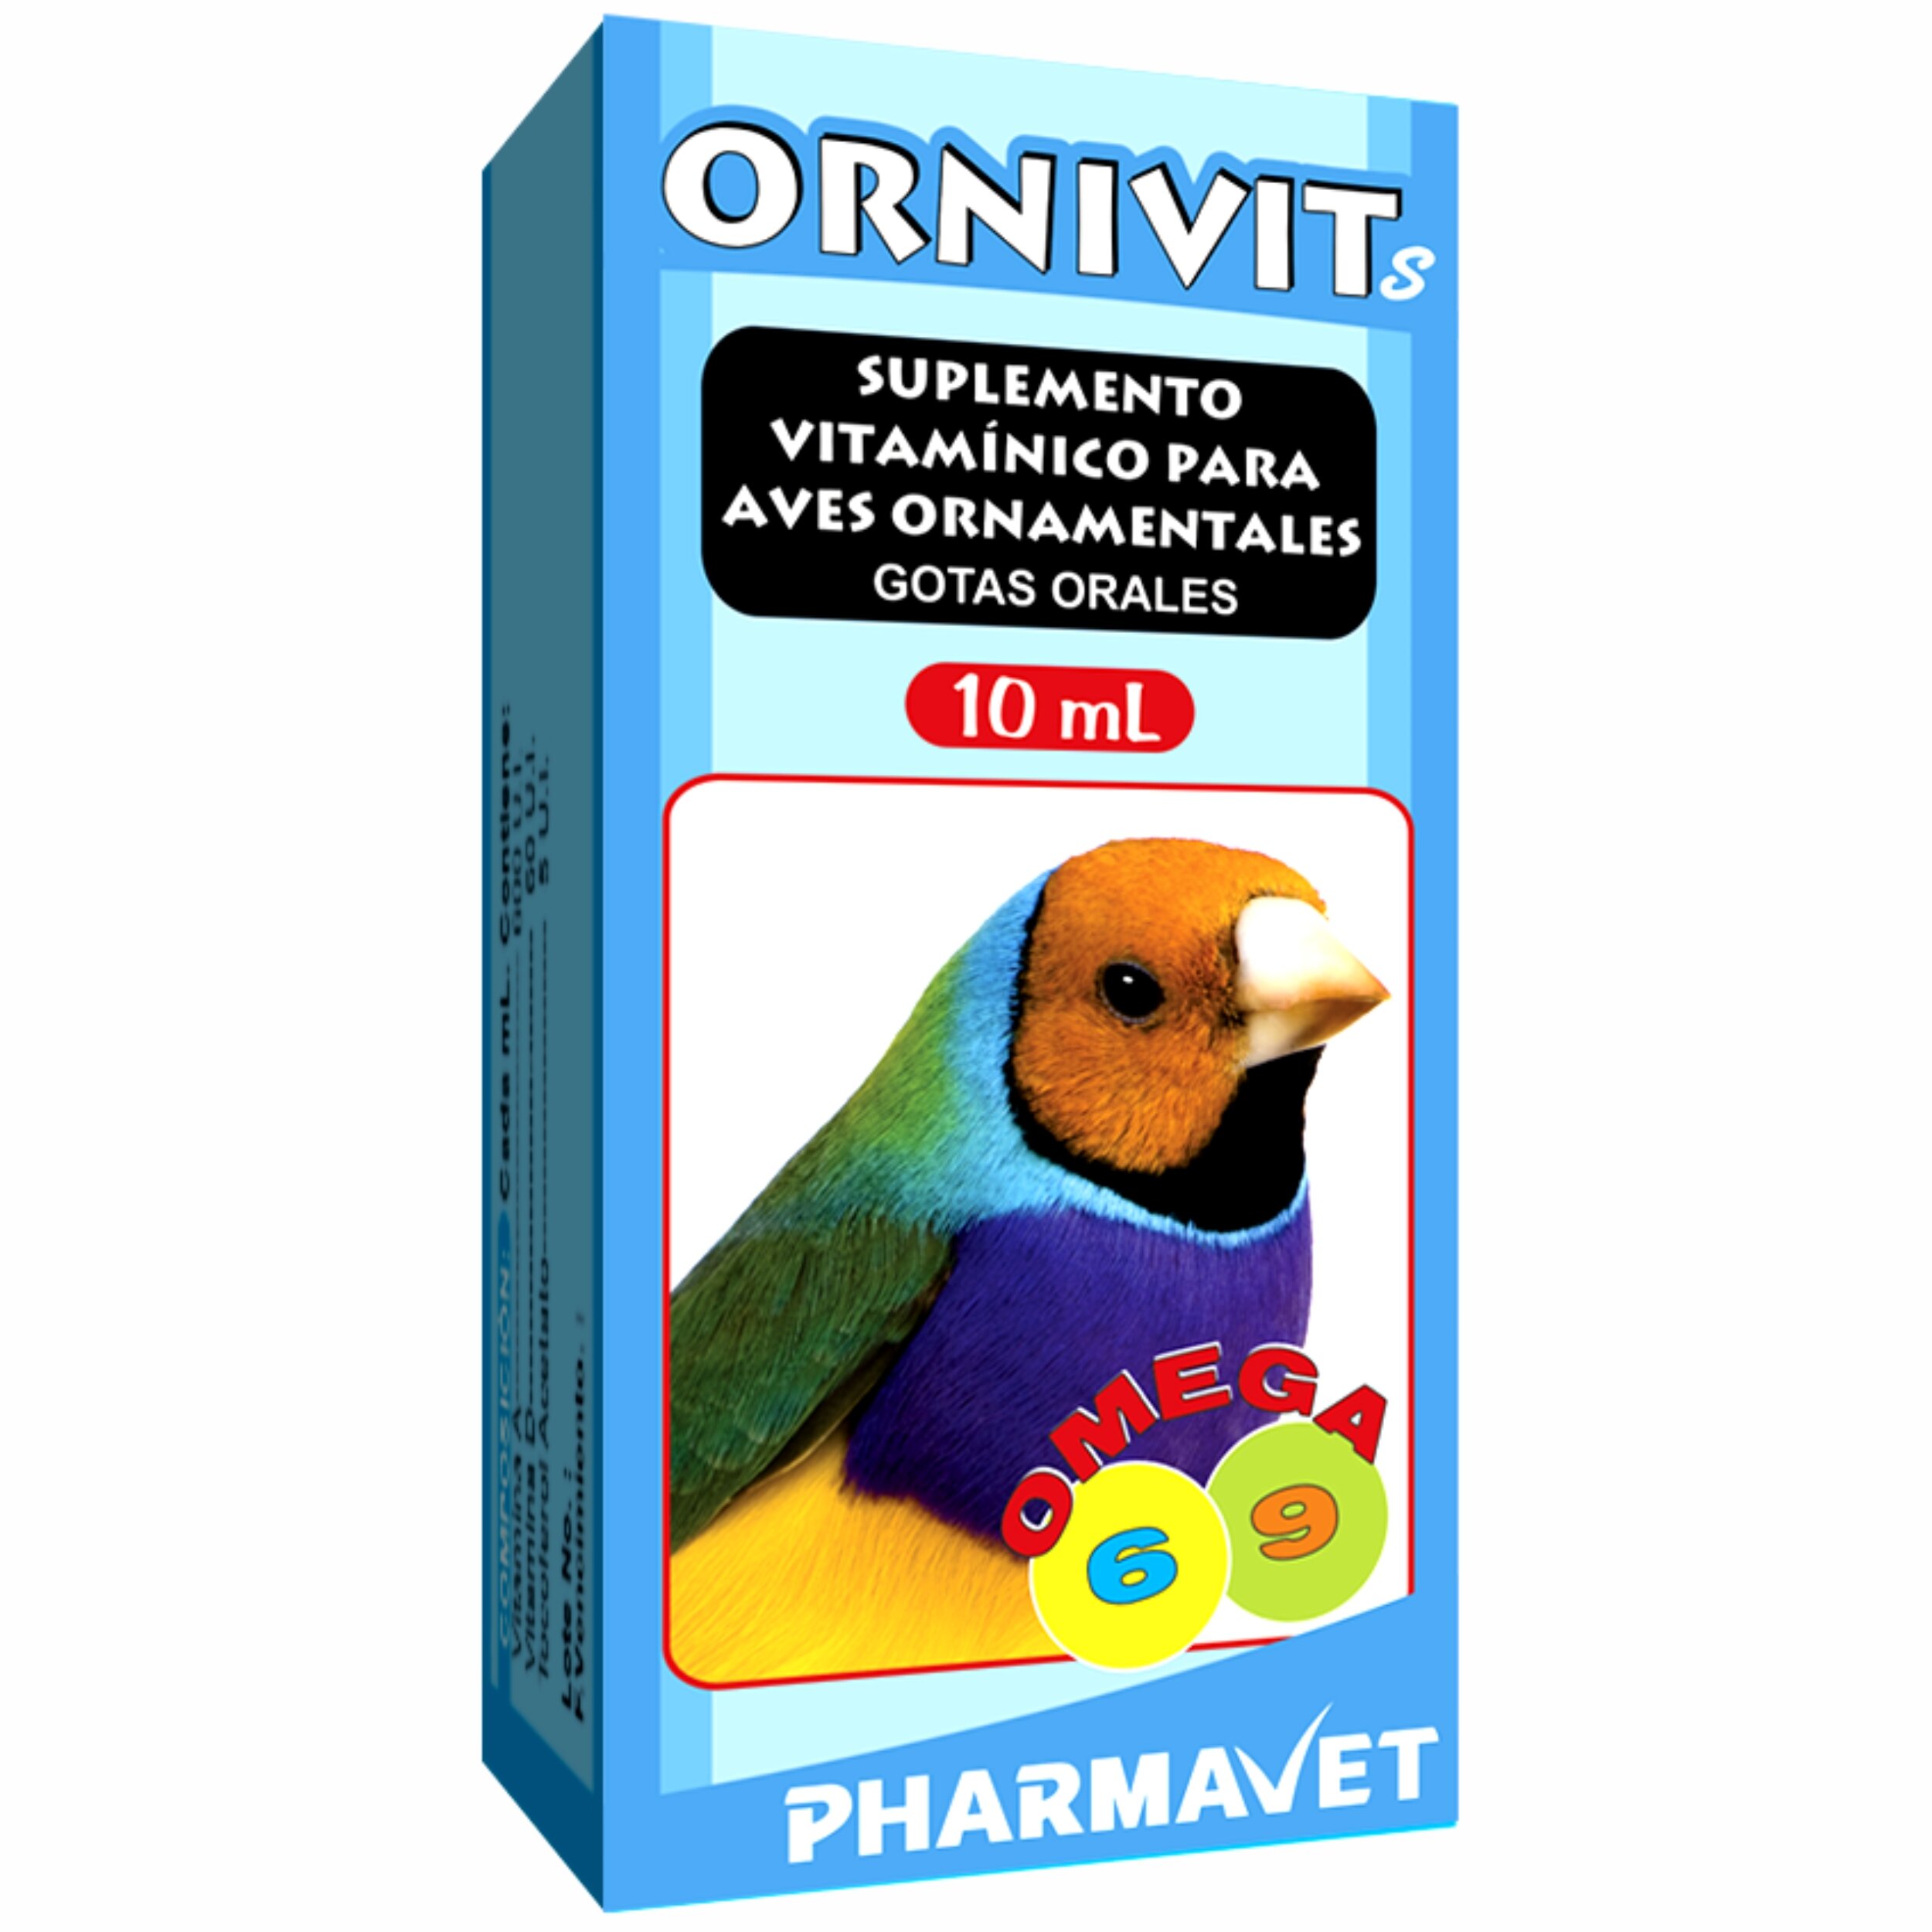 Ornivit